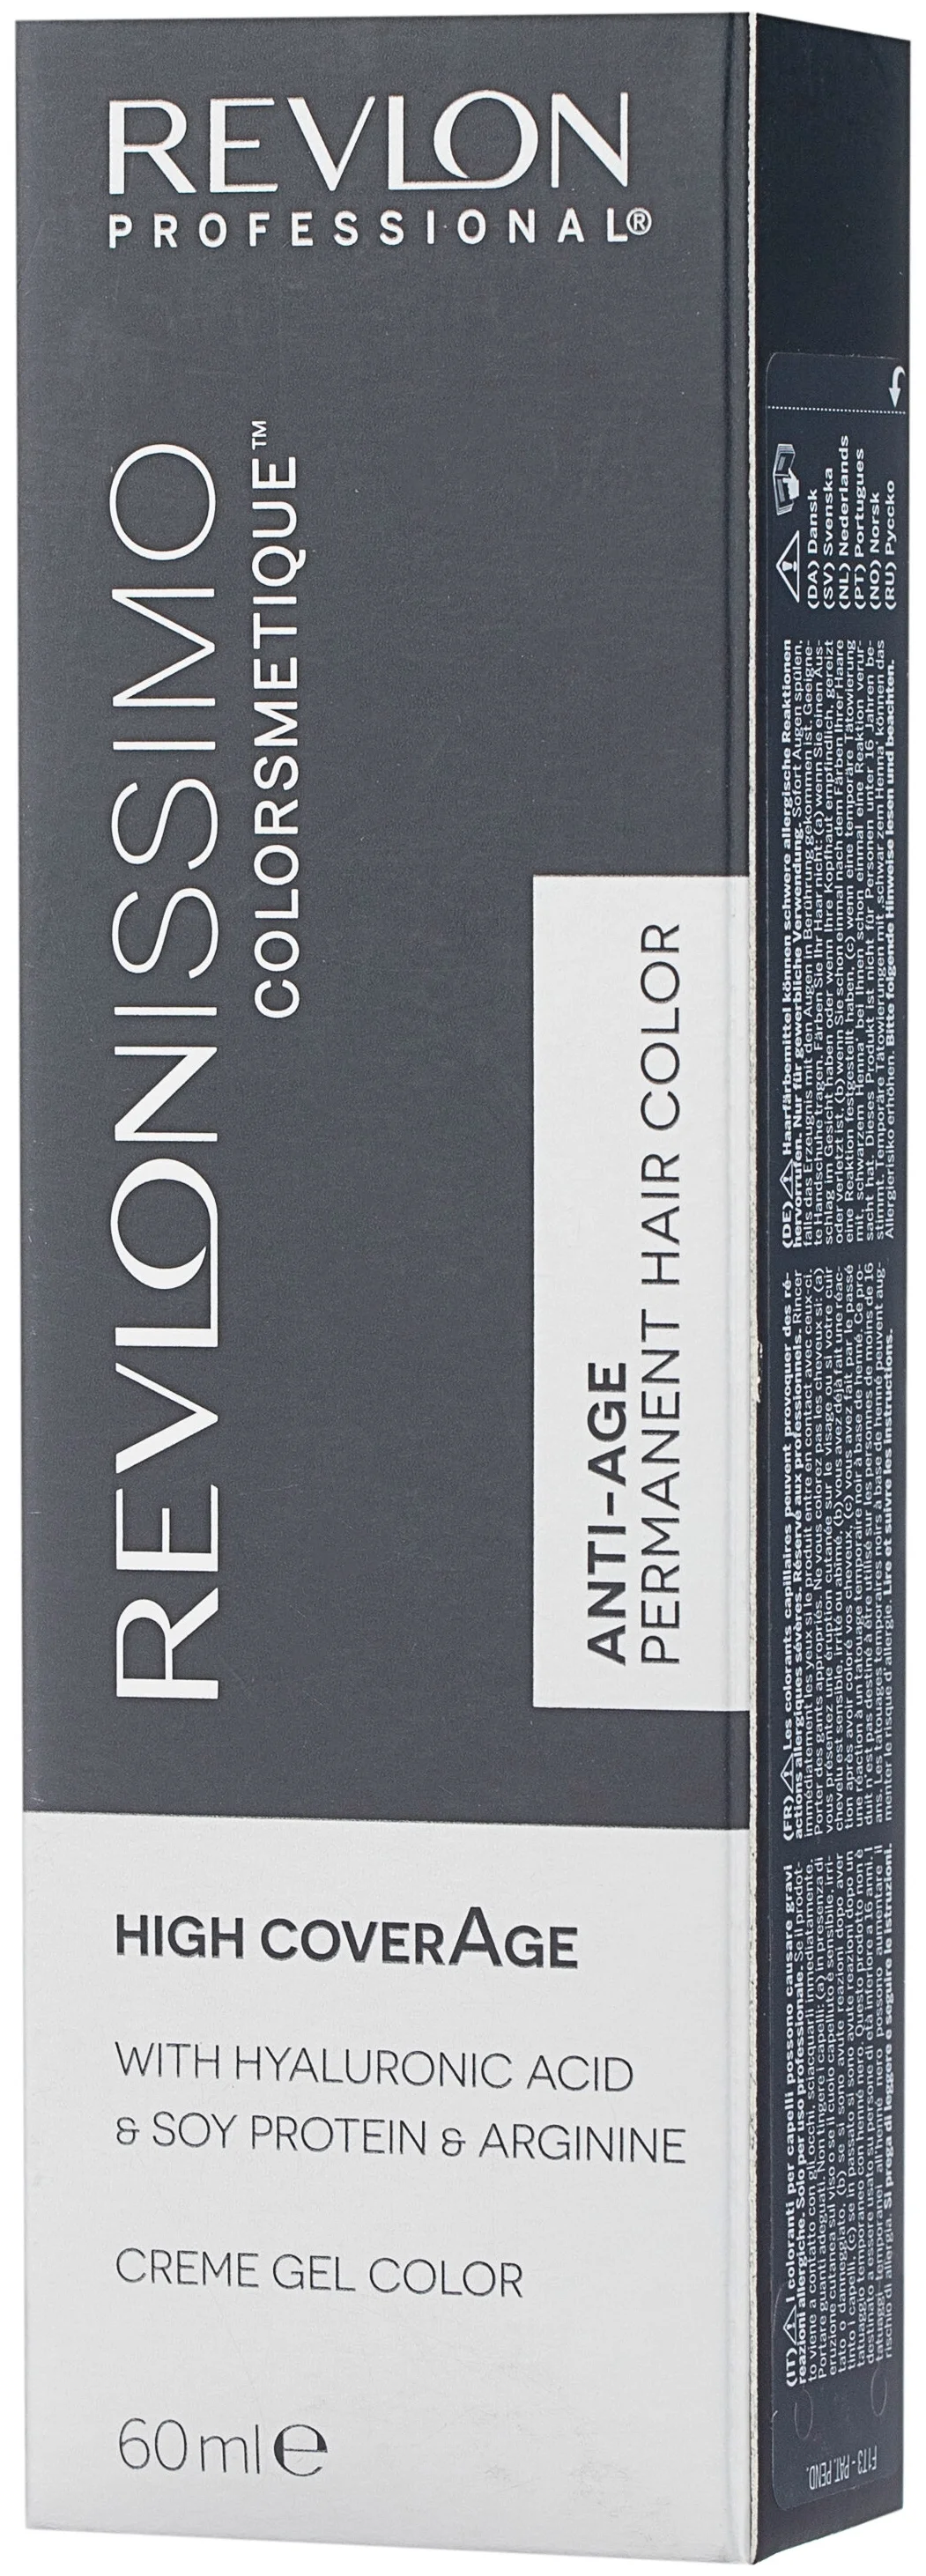 Revlon Professional "Revlonissimo Colorsmetique High Coverage" - масла и экстракты: комплекс масел